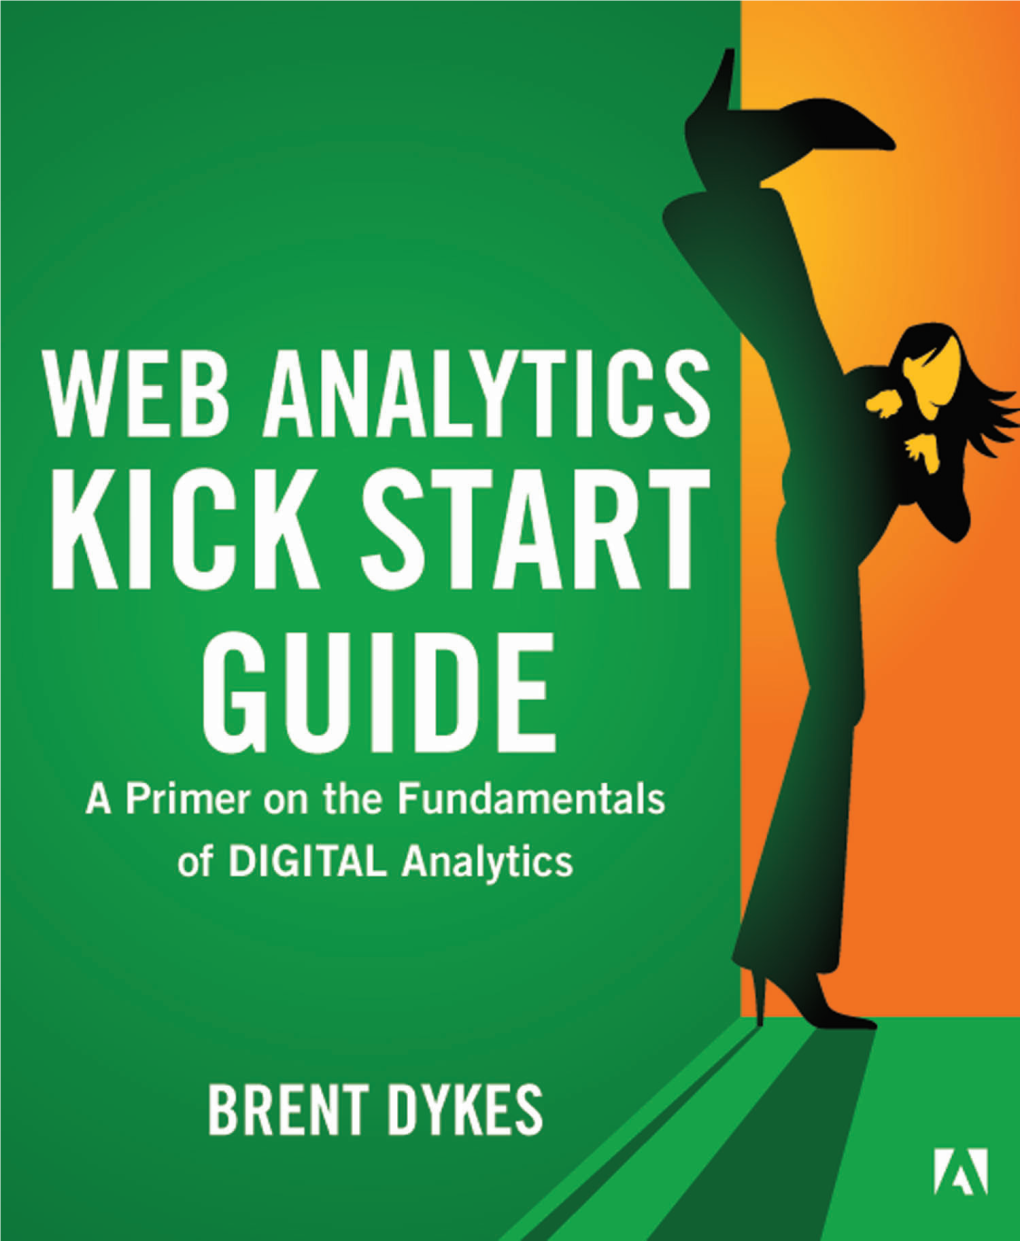 The Web Analytics Kick Start Guide: a Primer on the Fundamentals of DIGITAL Analytics